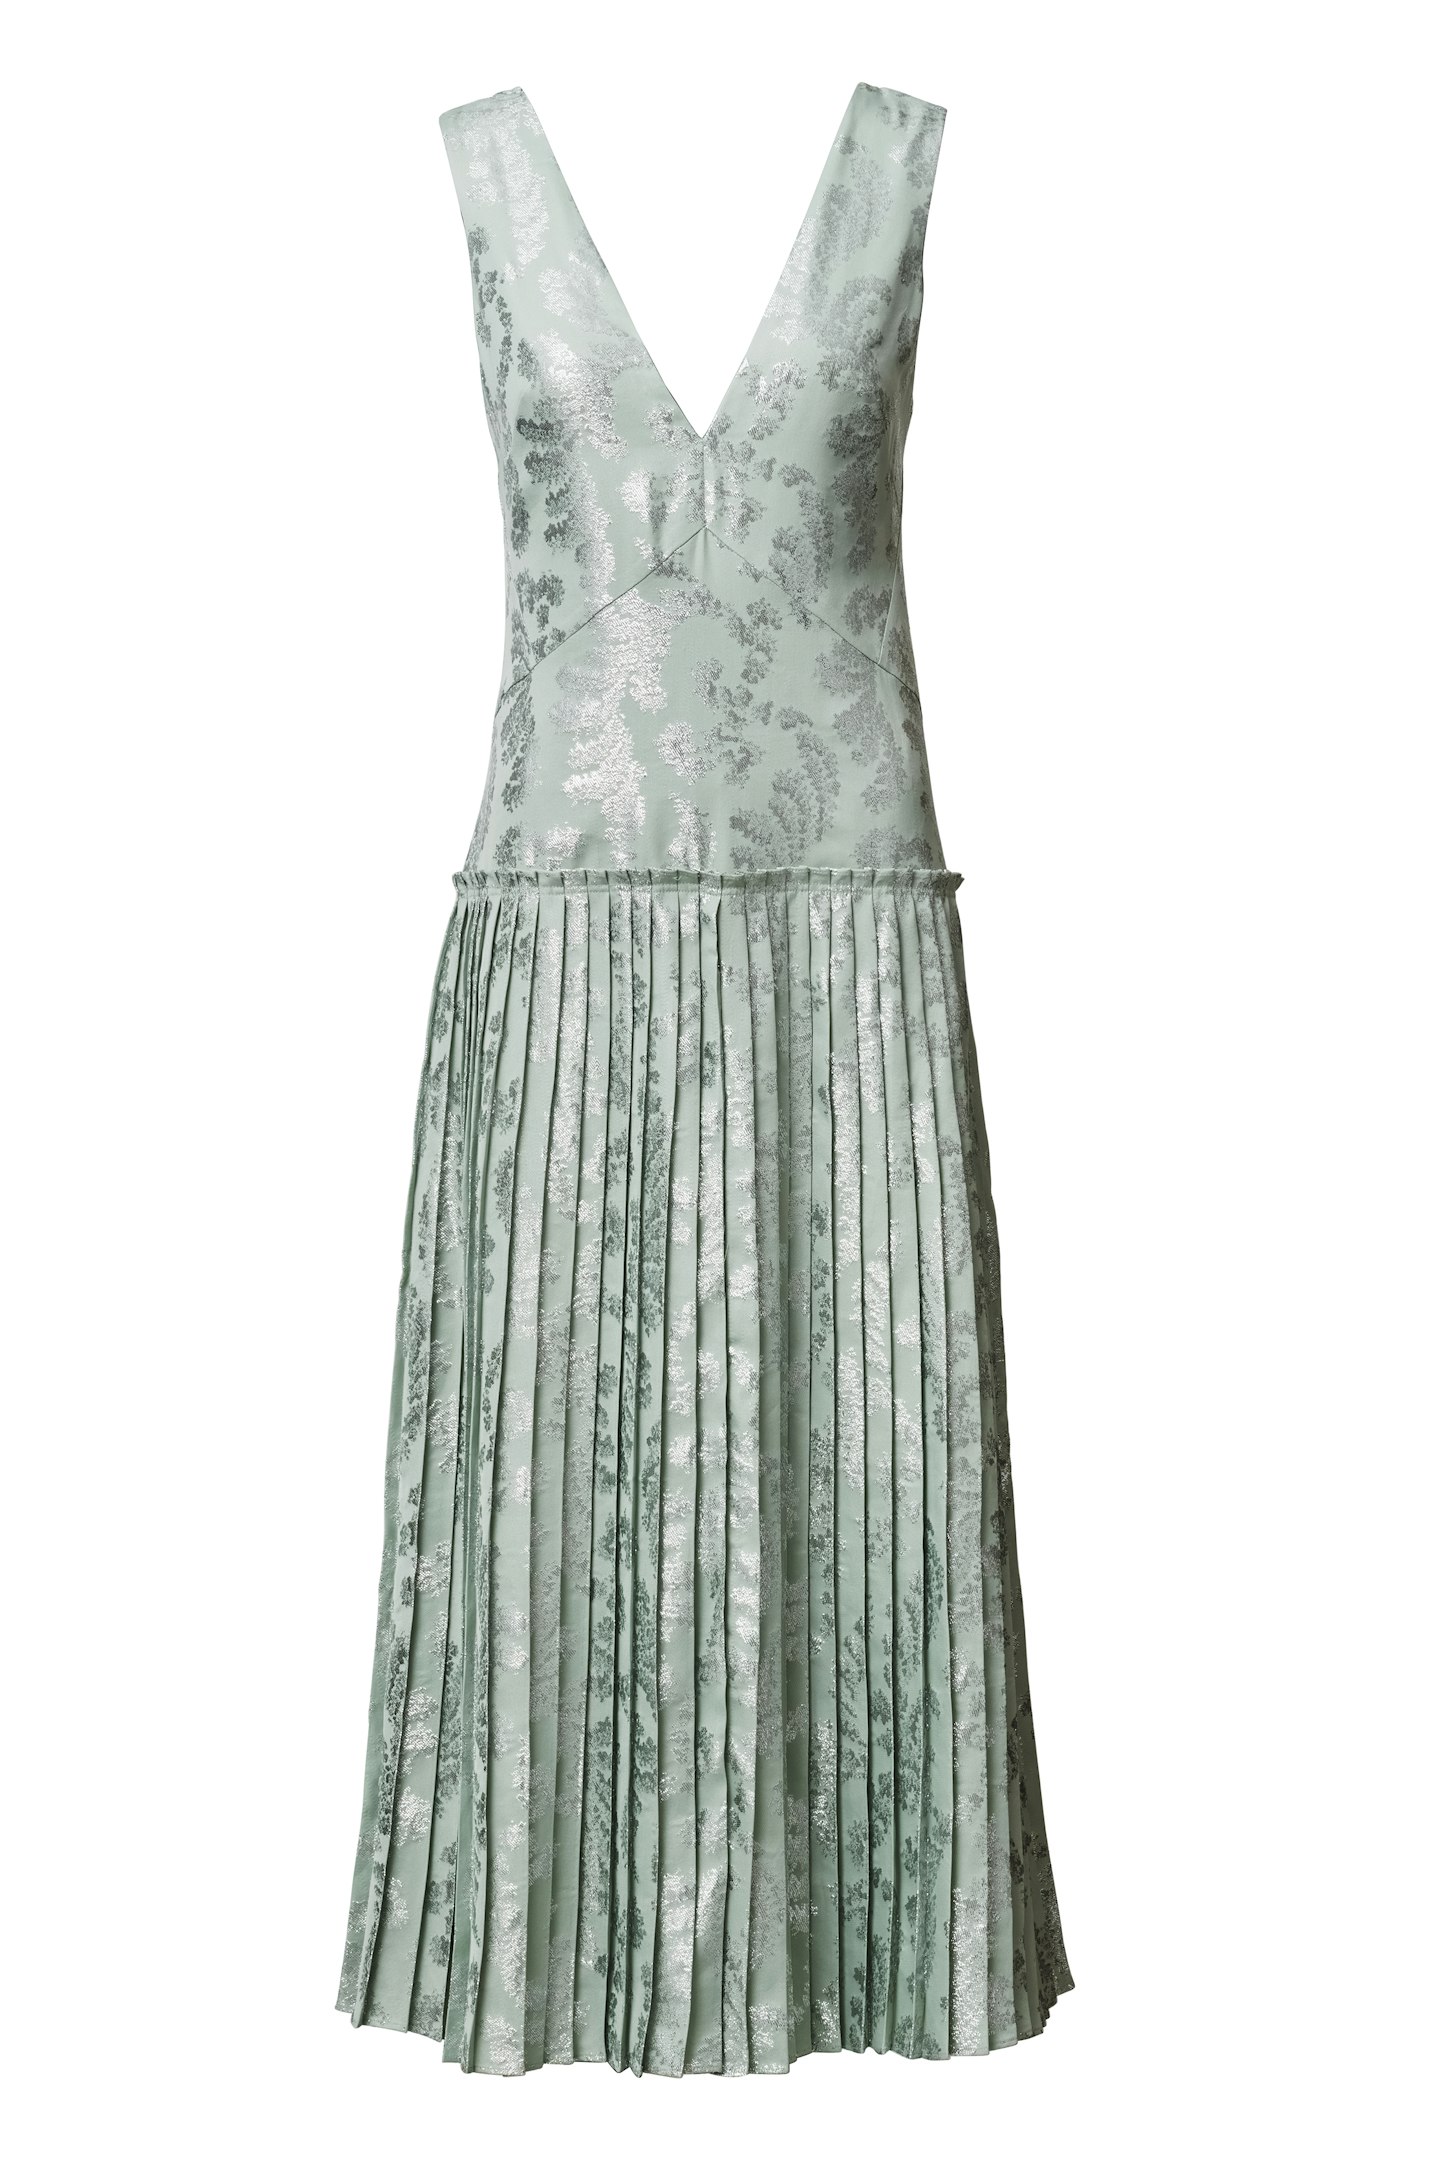 Jacquard Pattern Dress, £119.99